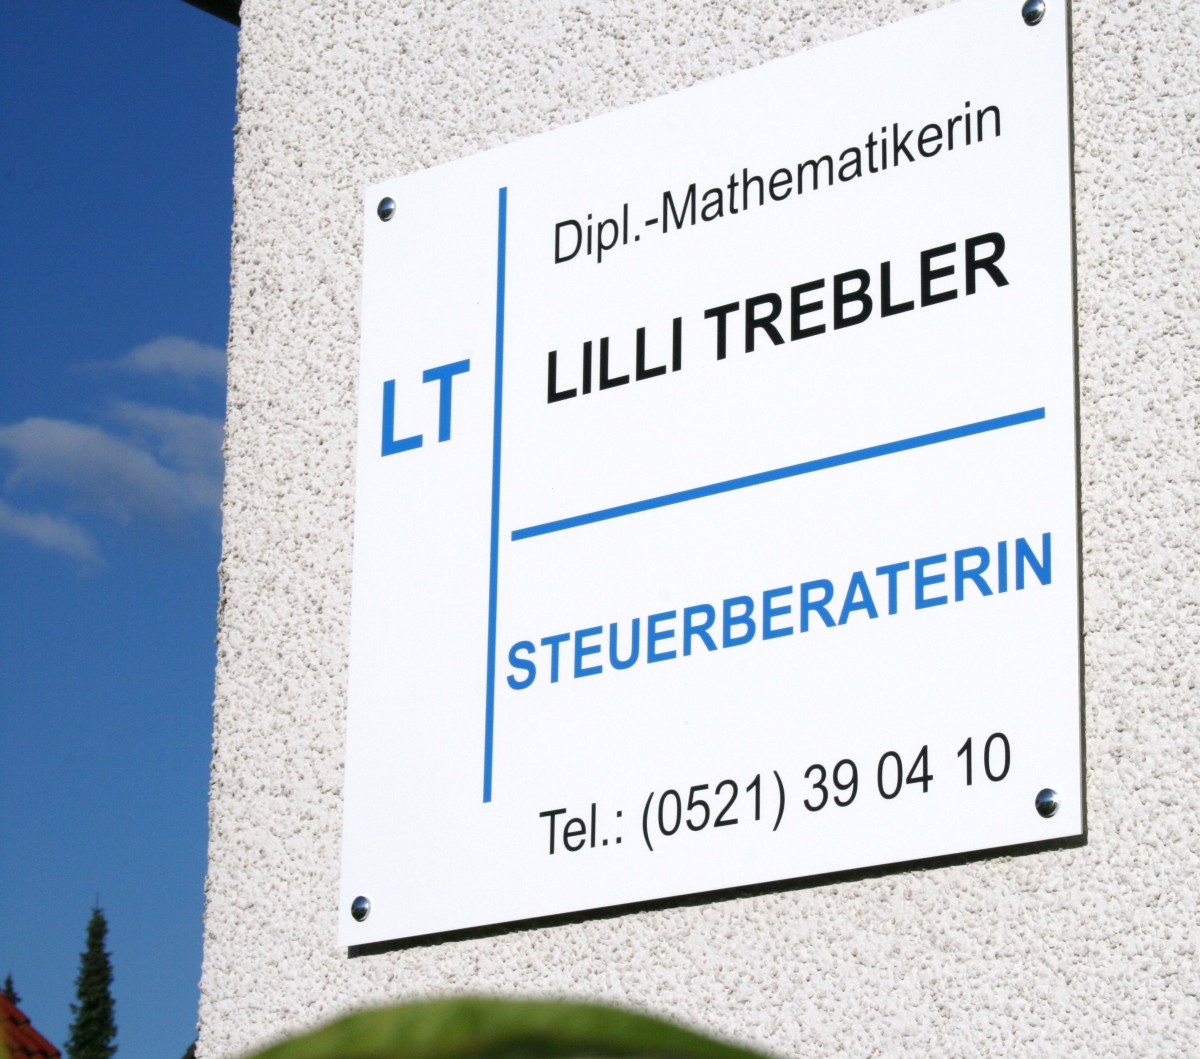 Steuerberaterin Lilli Trebler in Bielefeld Milse